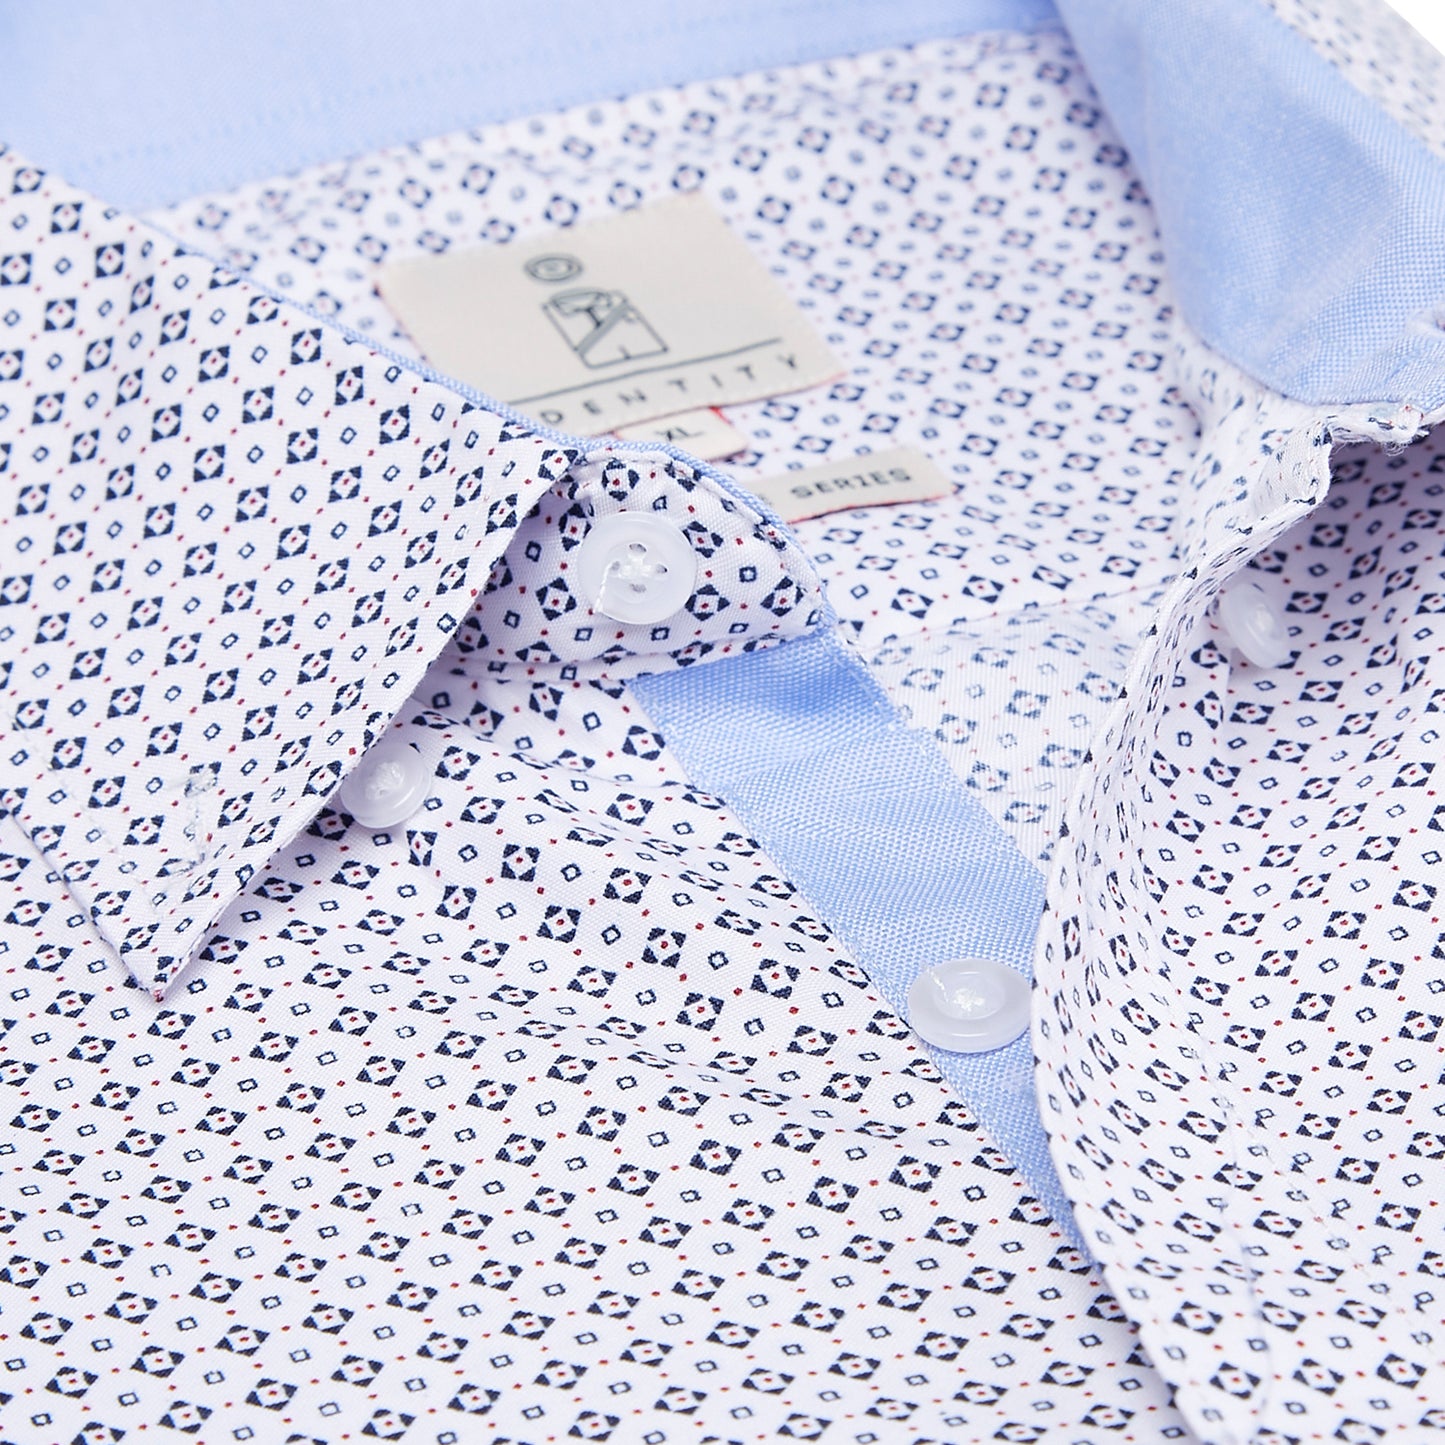 K1389 Mens REGULAR FIT Heritage Prints Button Down Short Sleeve Shirt - IDENTITY Apparel Shop